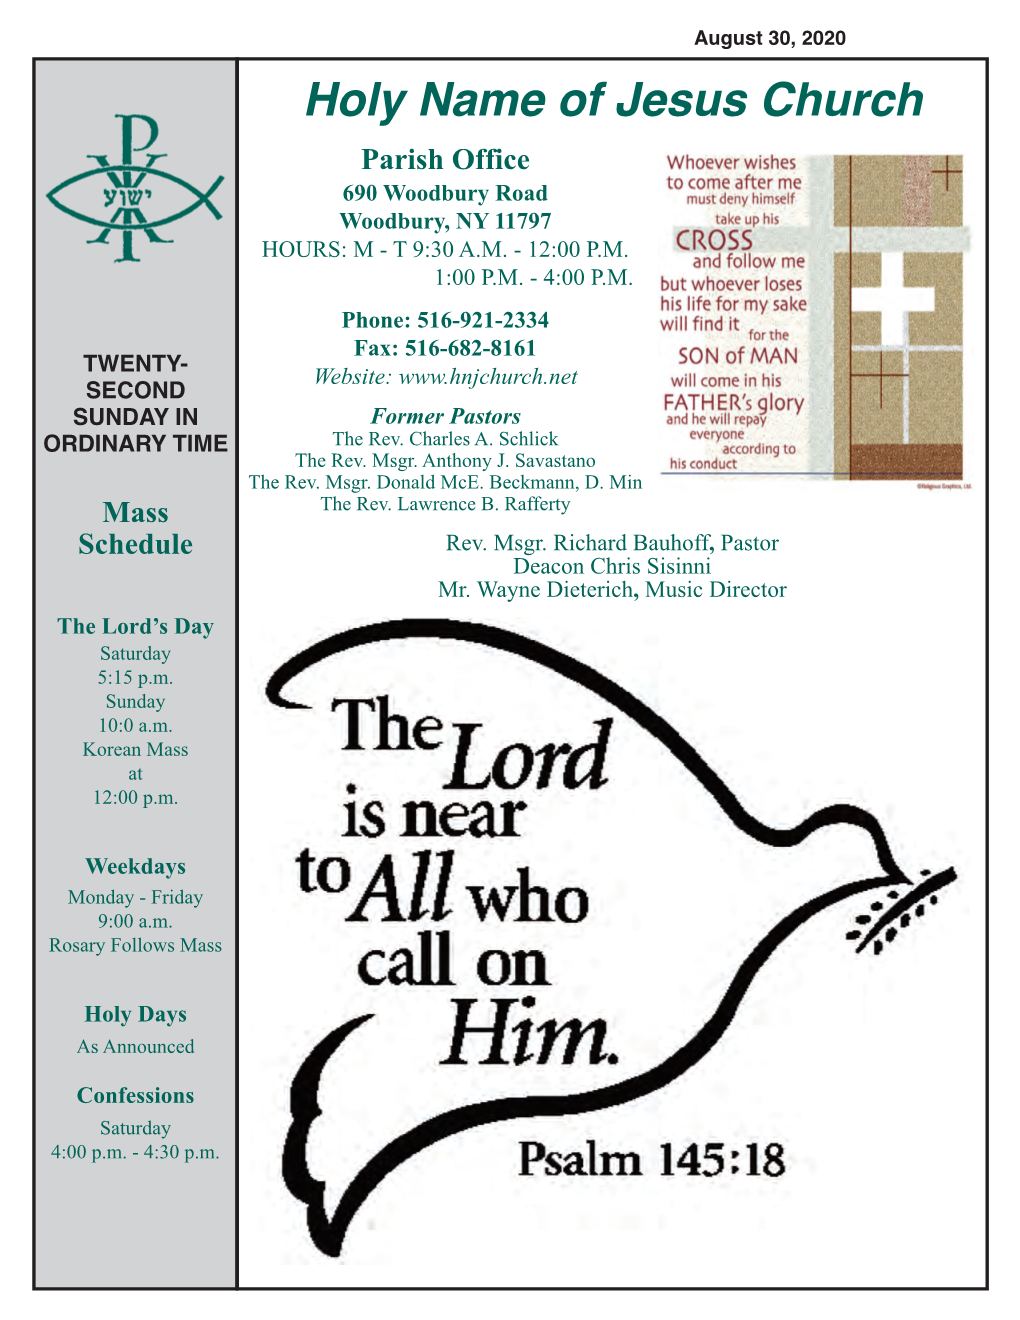 Holy Name of Jesus Church Parish Office 690 Woodbury Road Woodbury, NY 11797 HOURS: M - T 9:30 A.M